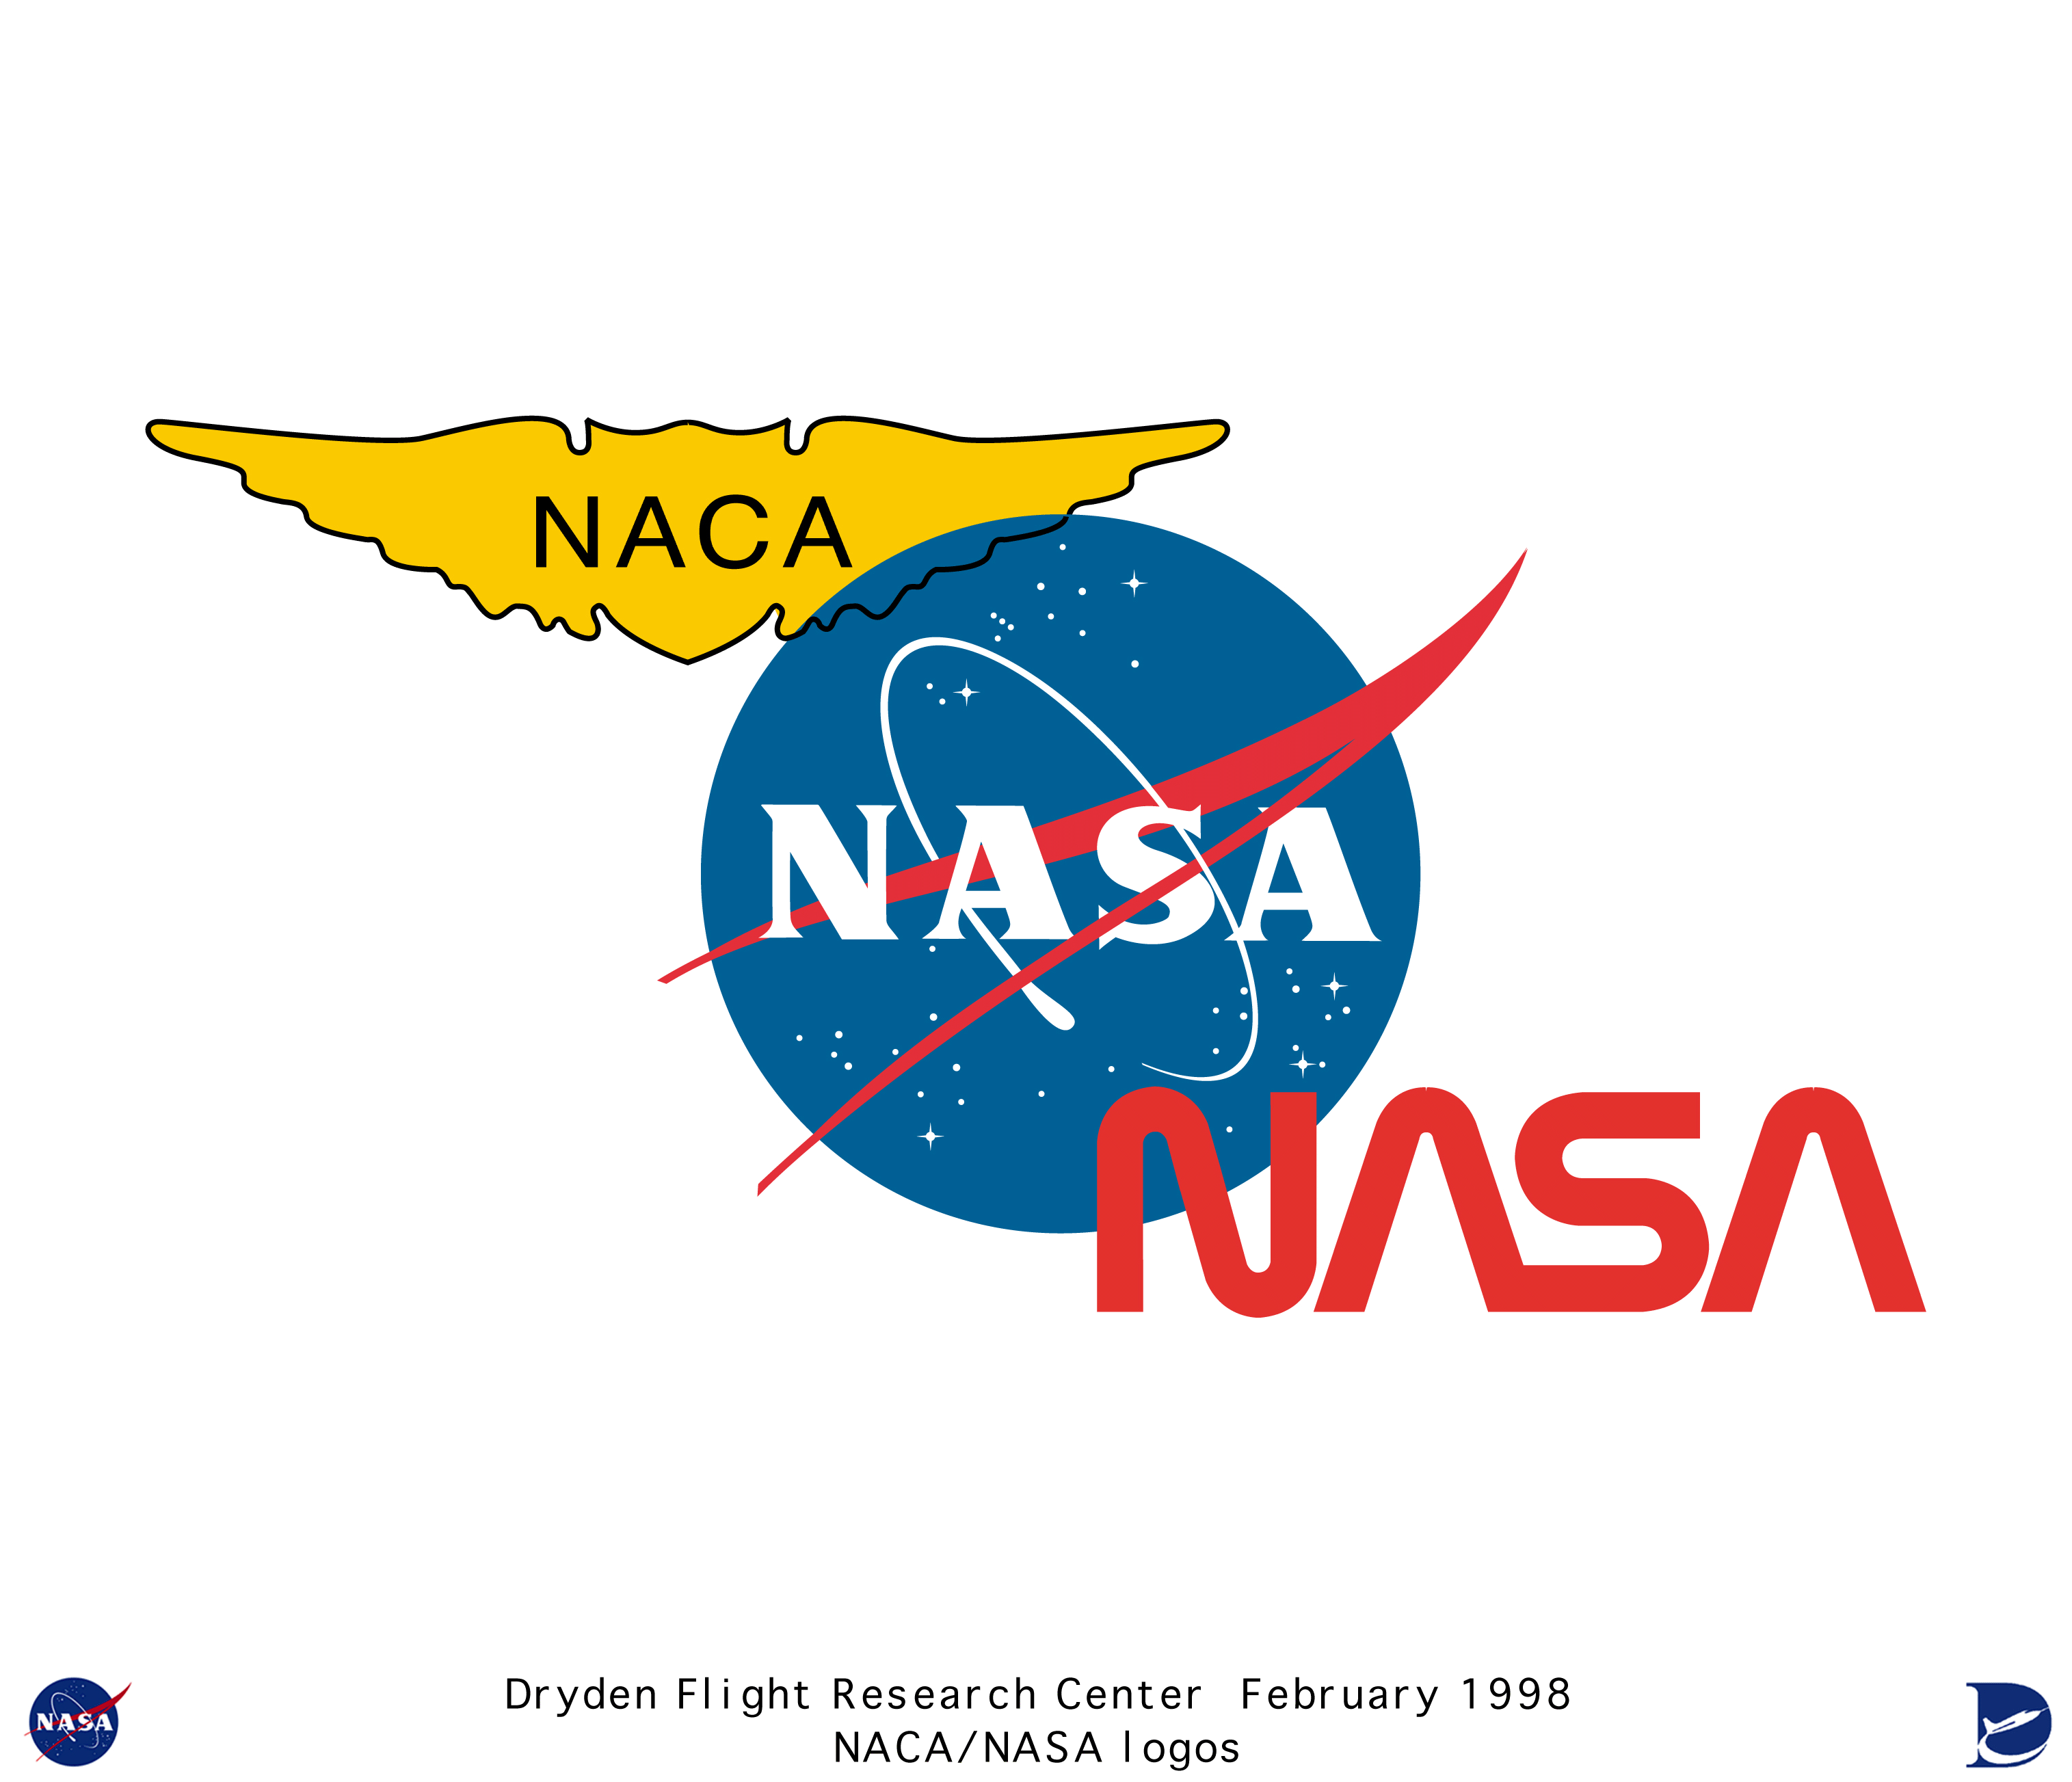 Aeronautics NACA Logo - Logos color_tri-logo: Color tri-logo (NACA, 2 NASA insignia)